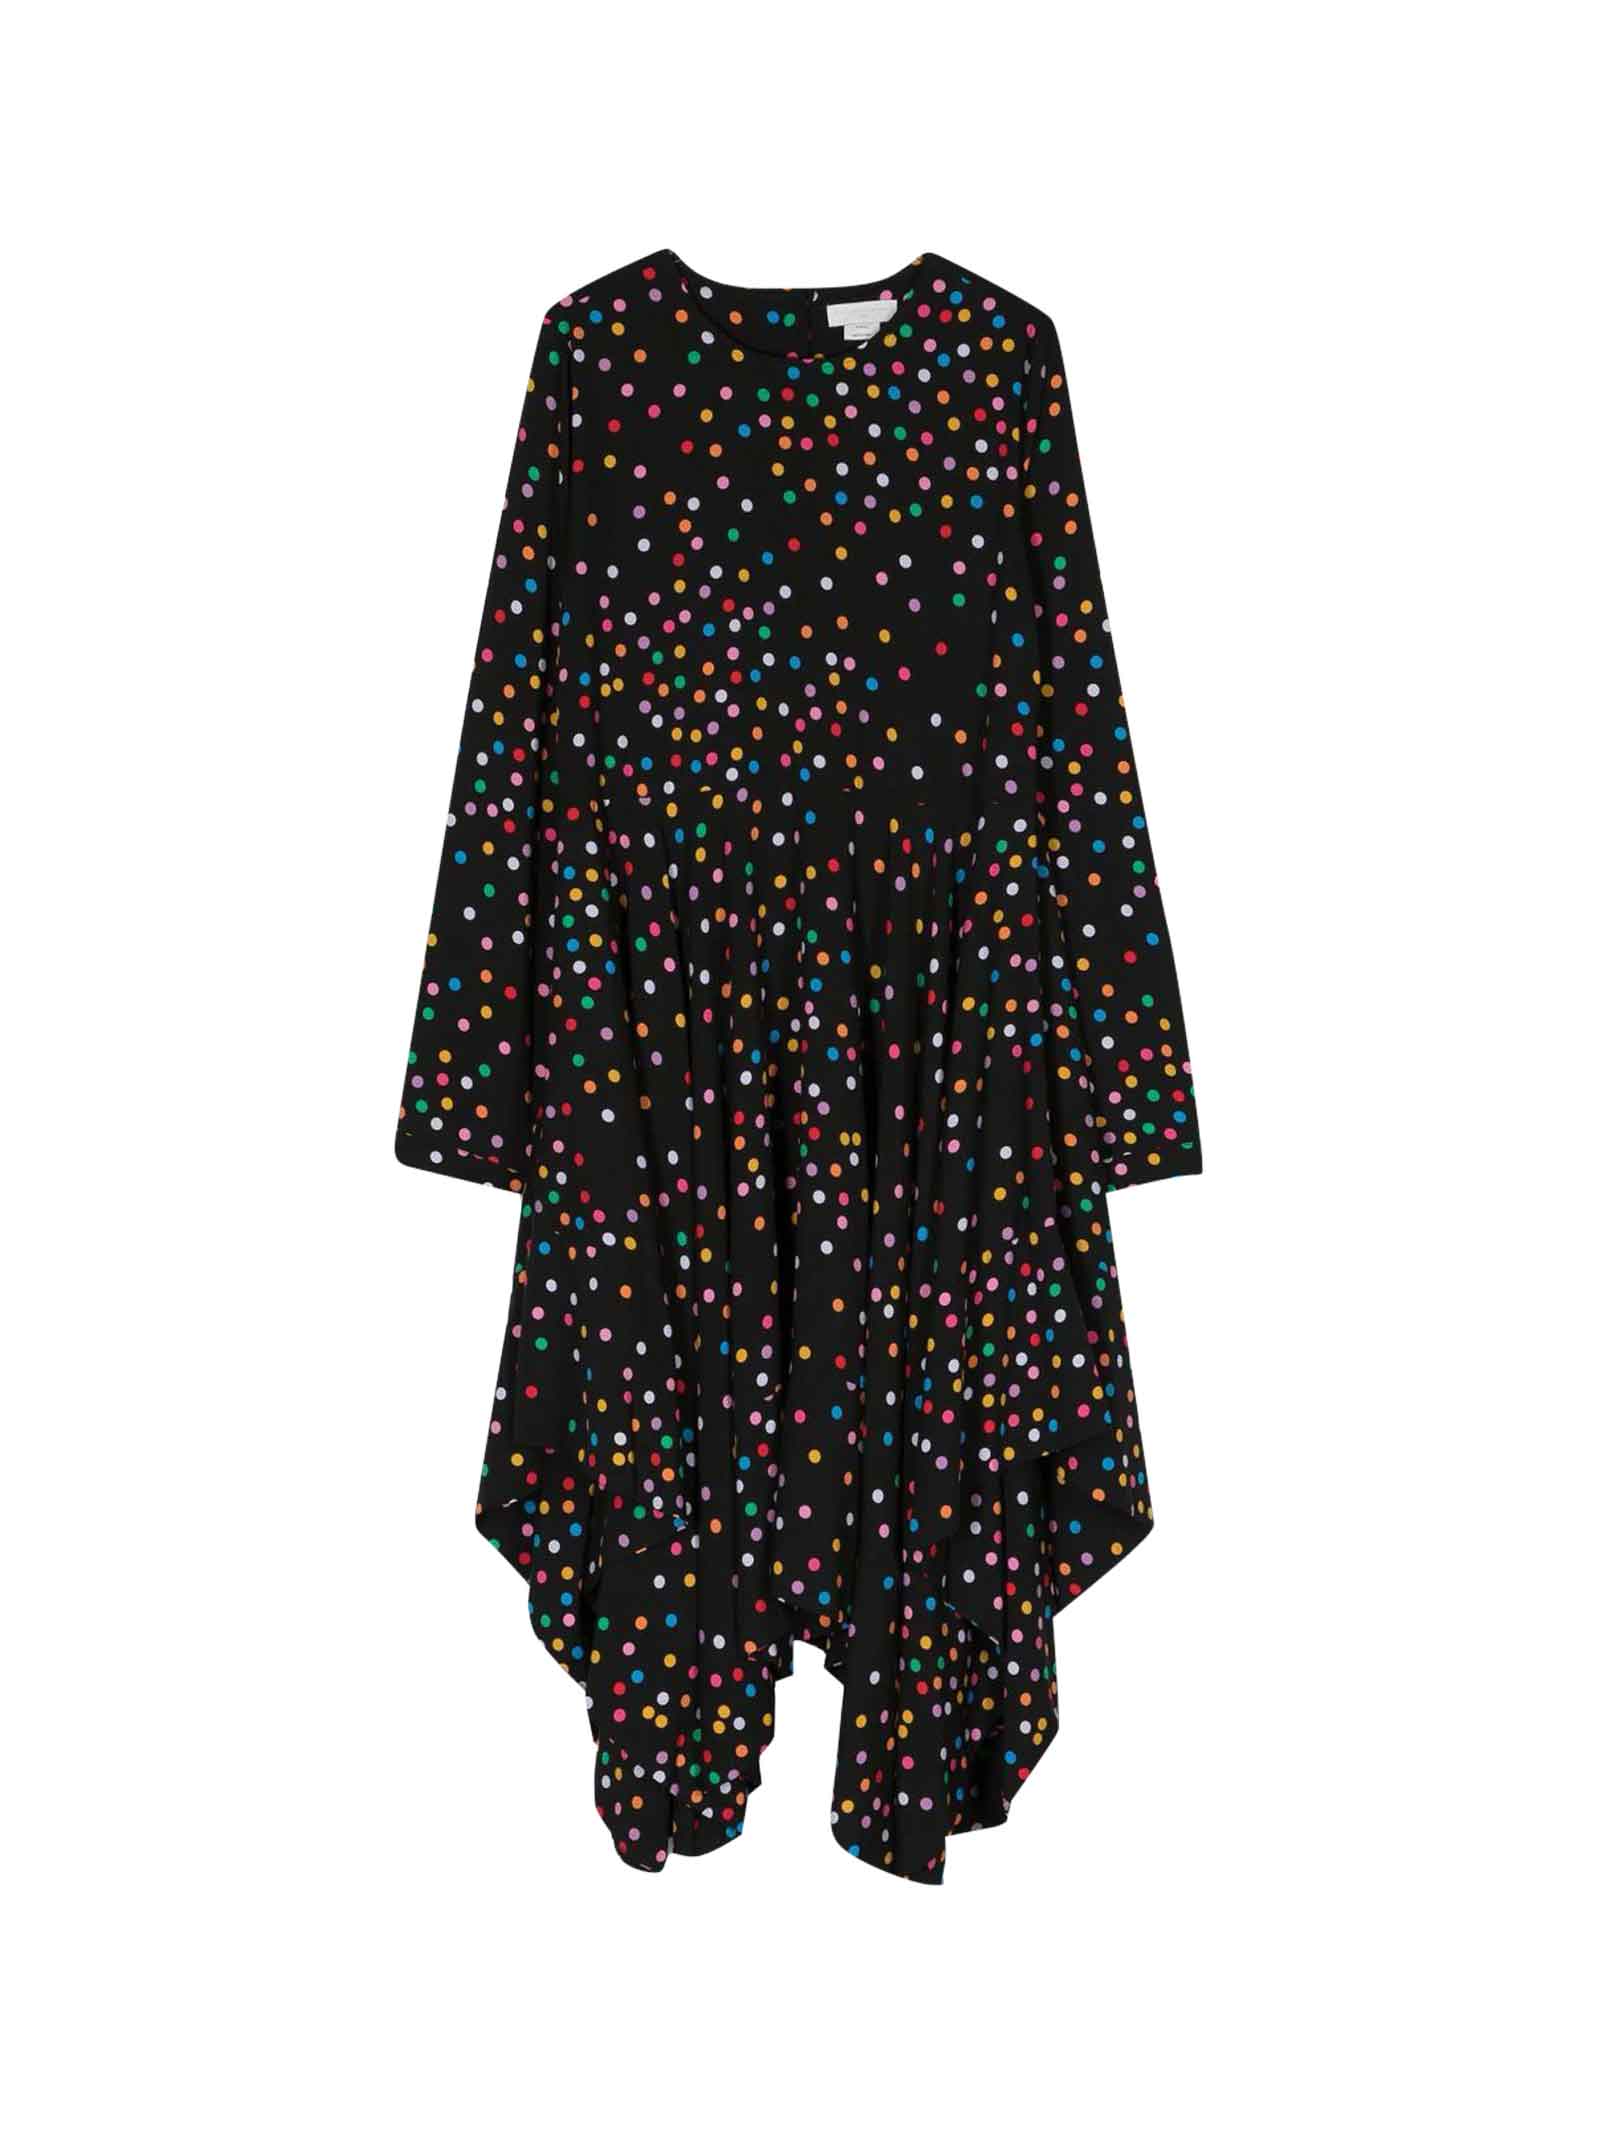 Stella McCartney Kids Black / Multicolor Dress Baby Girl.